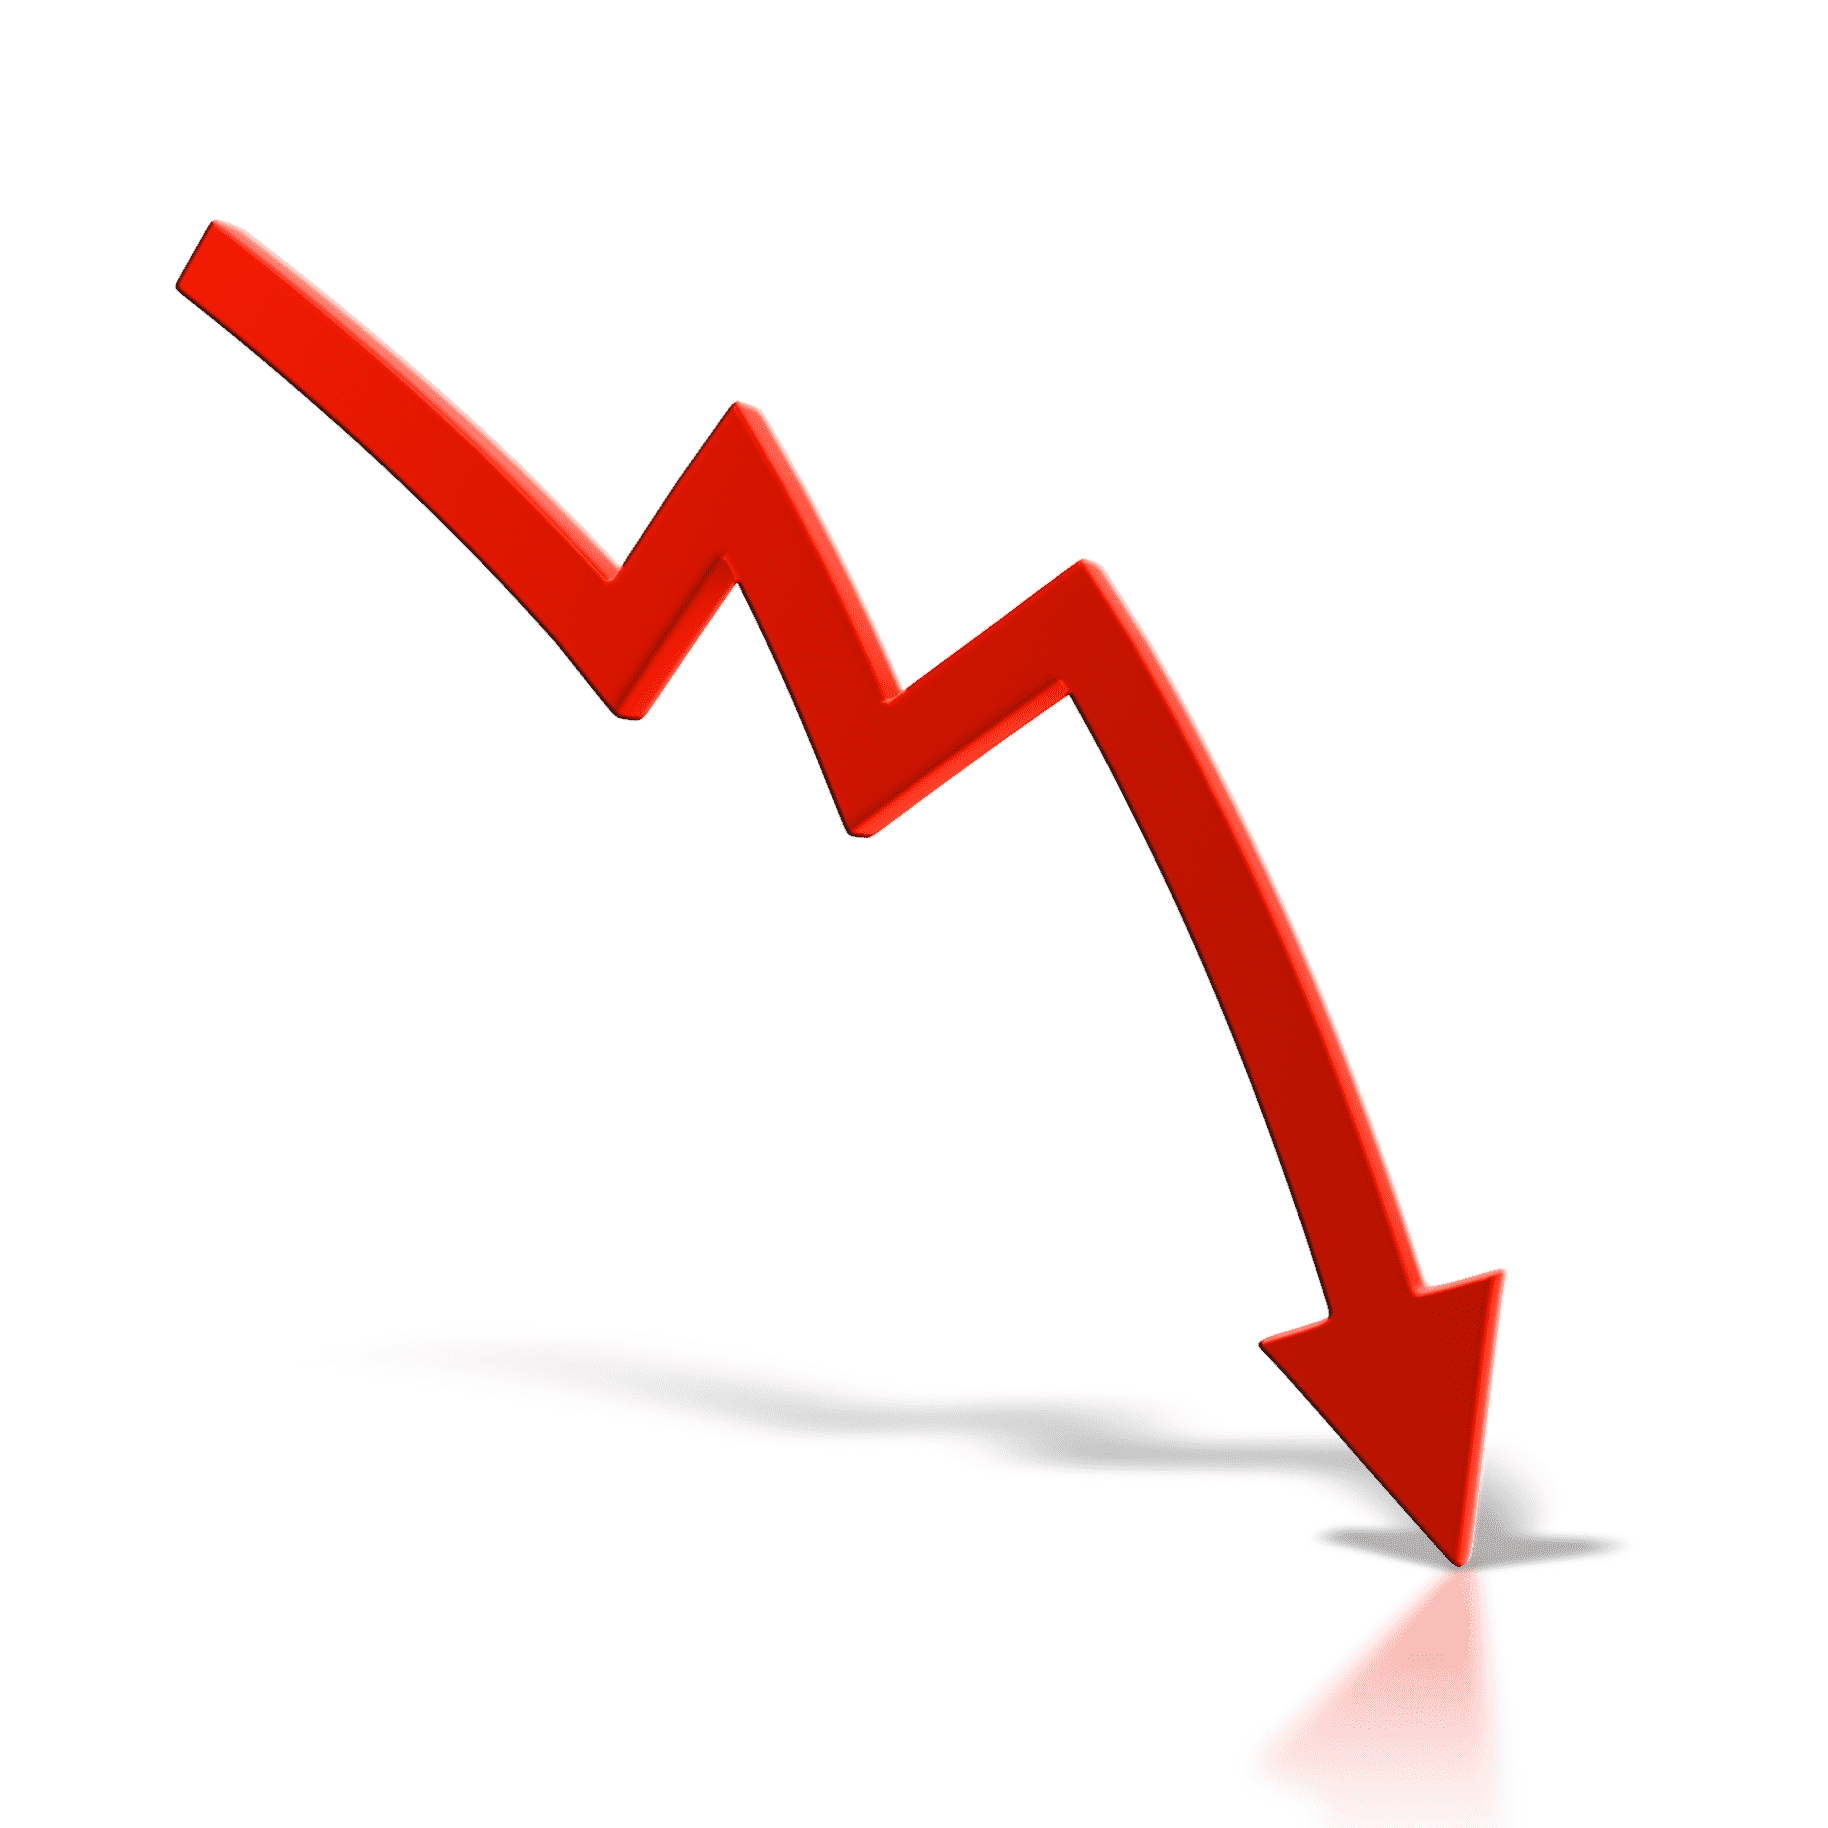 Stock Market loss Arrow PNG - PNGBUY